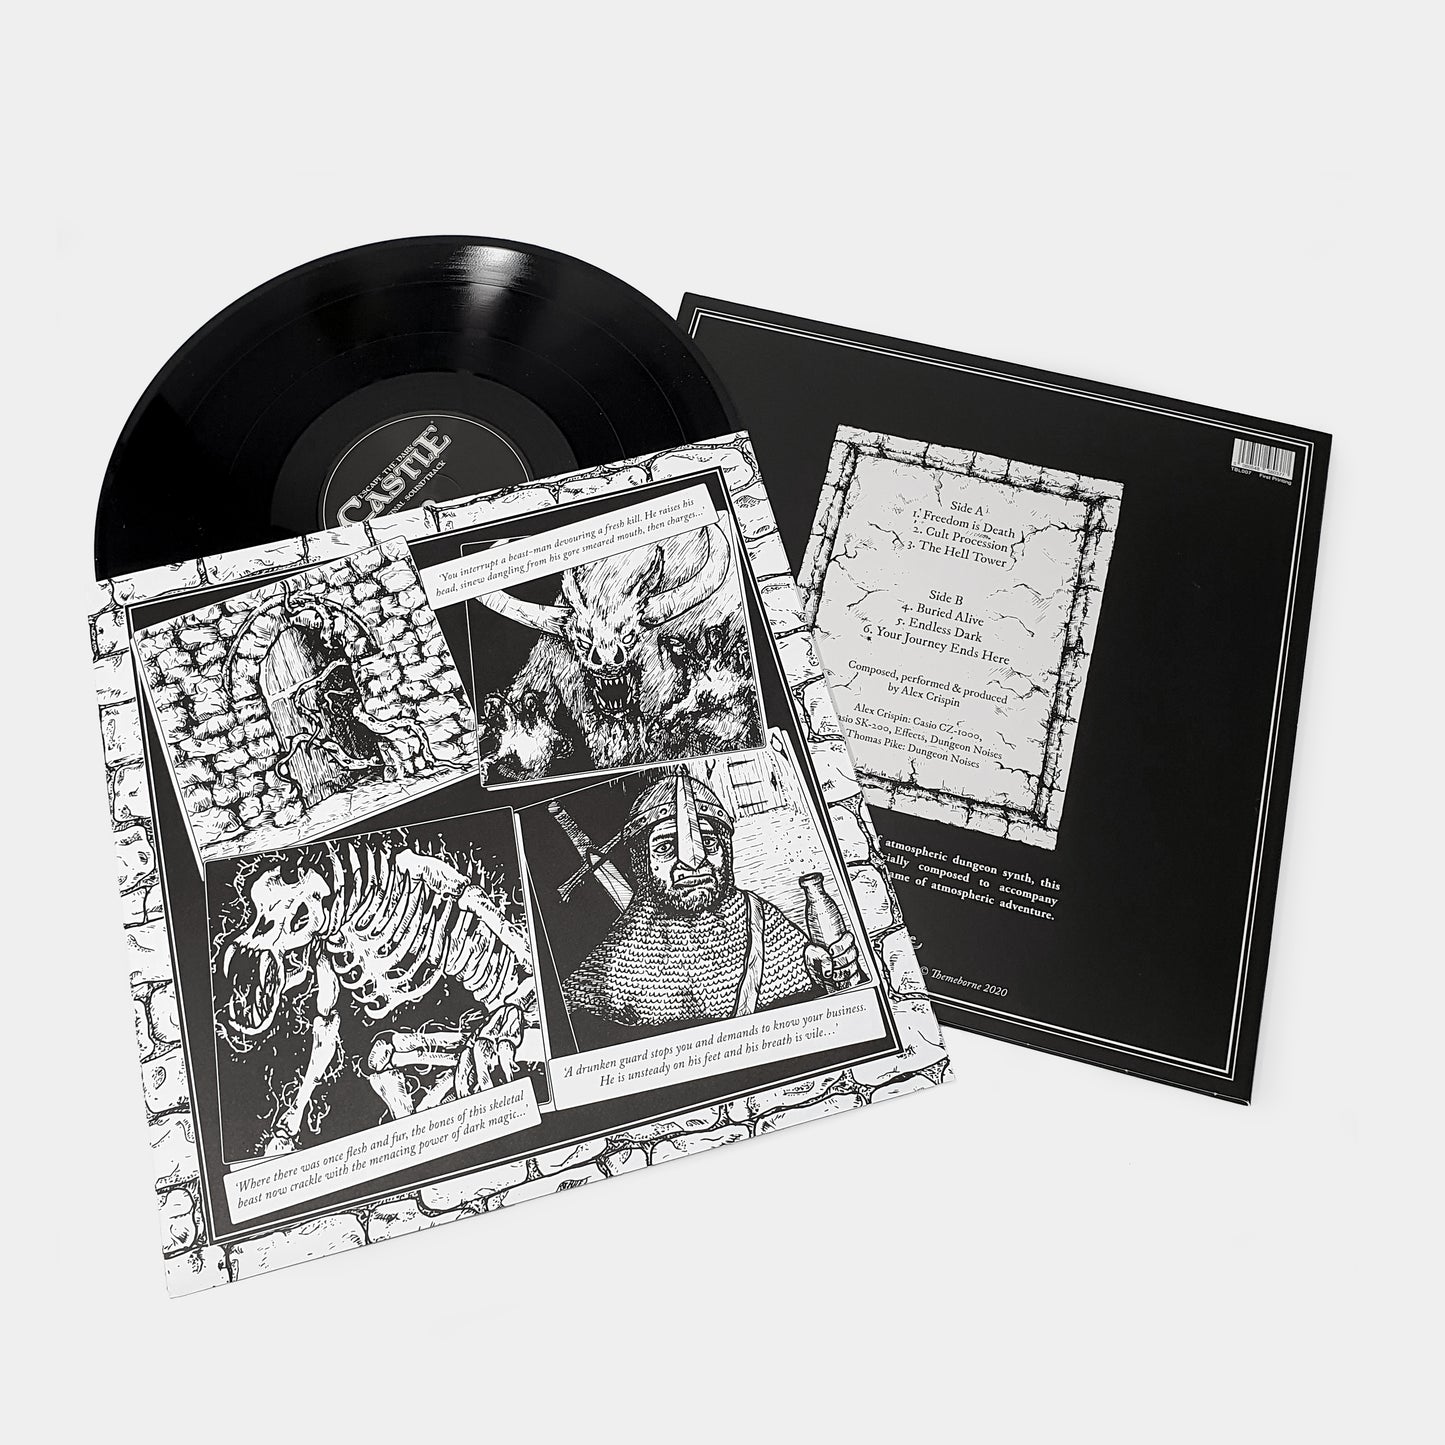 Castle Soundtrack on Vinyl - LIMITED EDITION